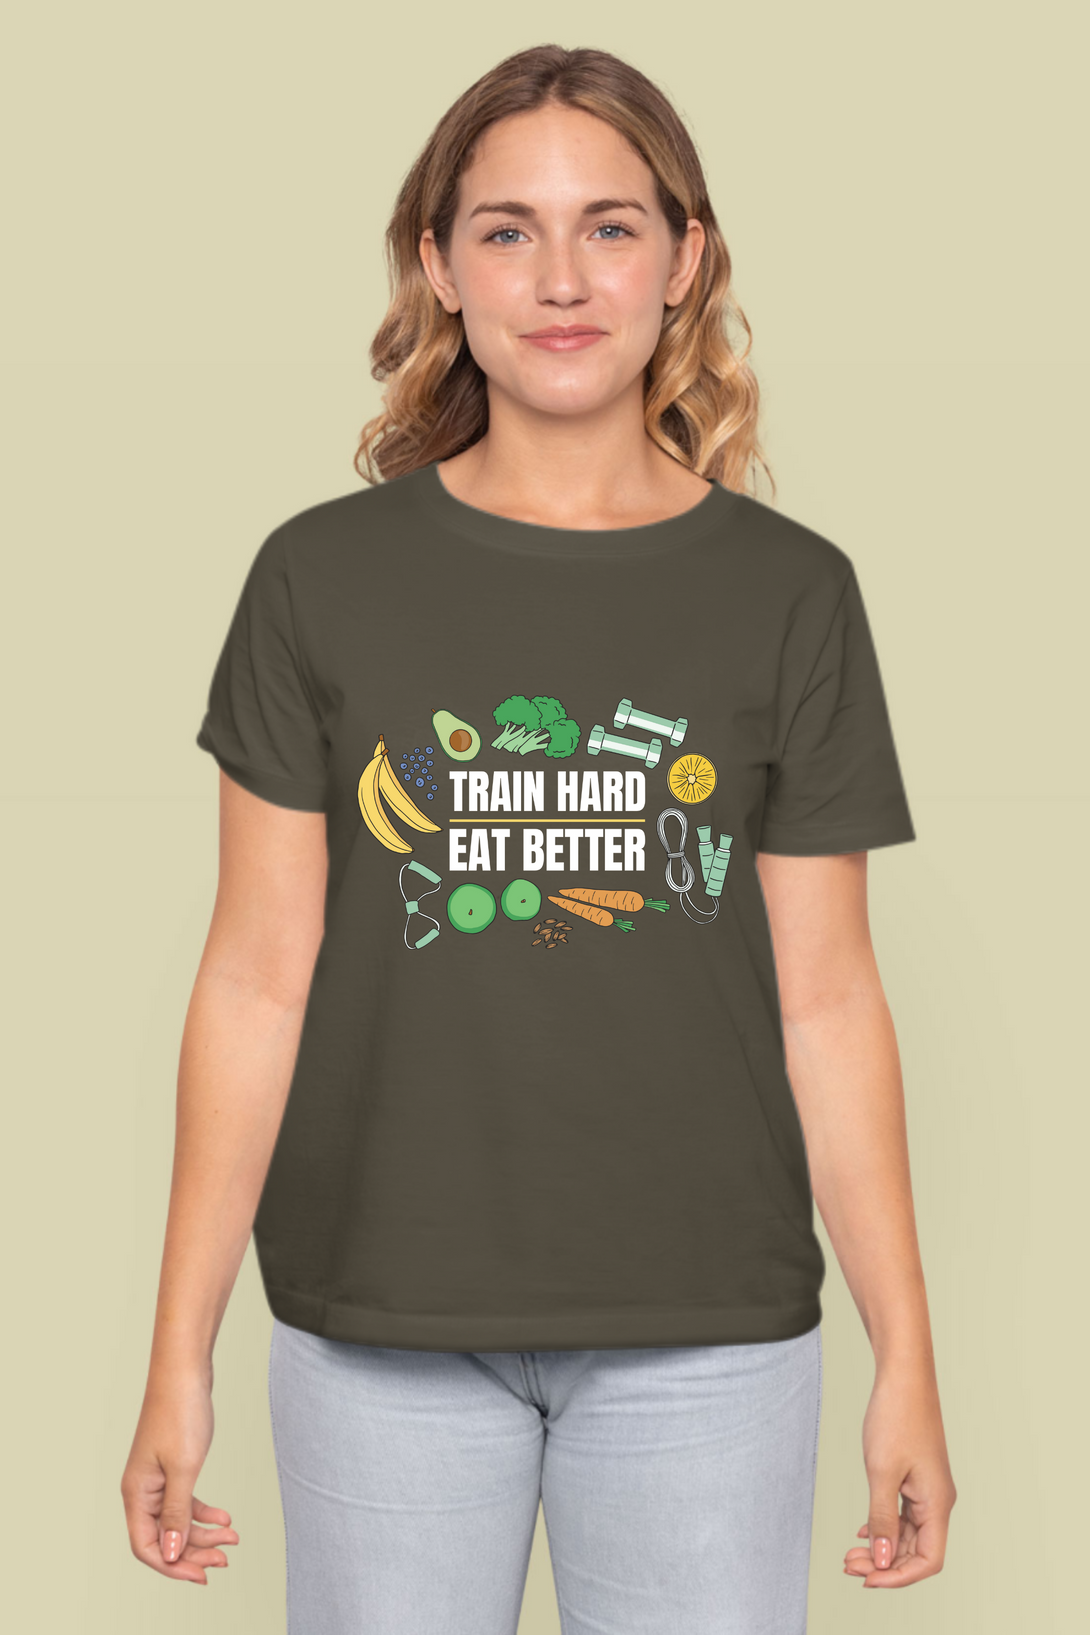 Train Hard, Eat Better Printed T-Shirt For Women - WowWaves - 7